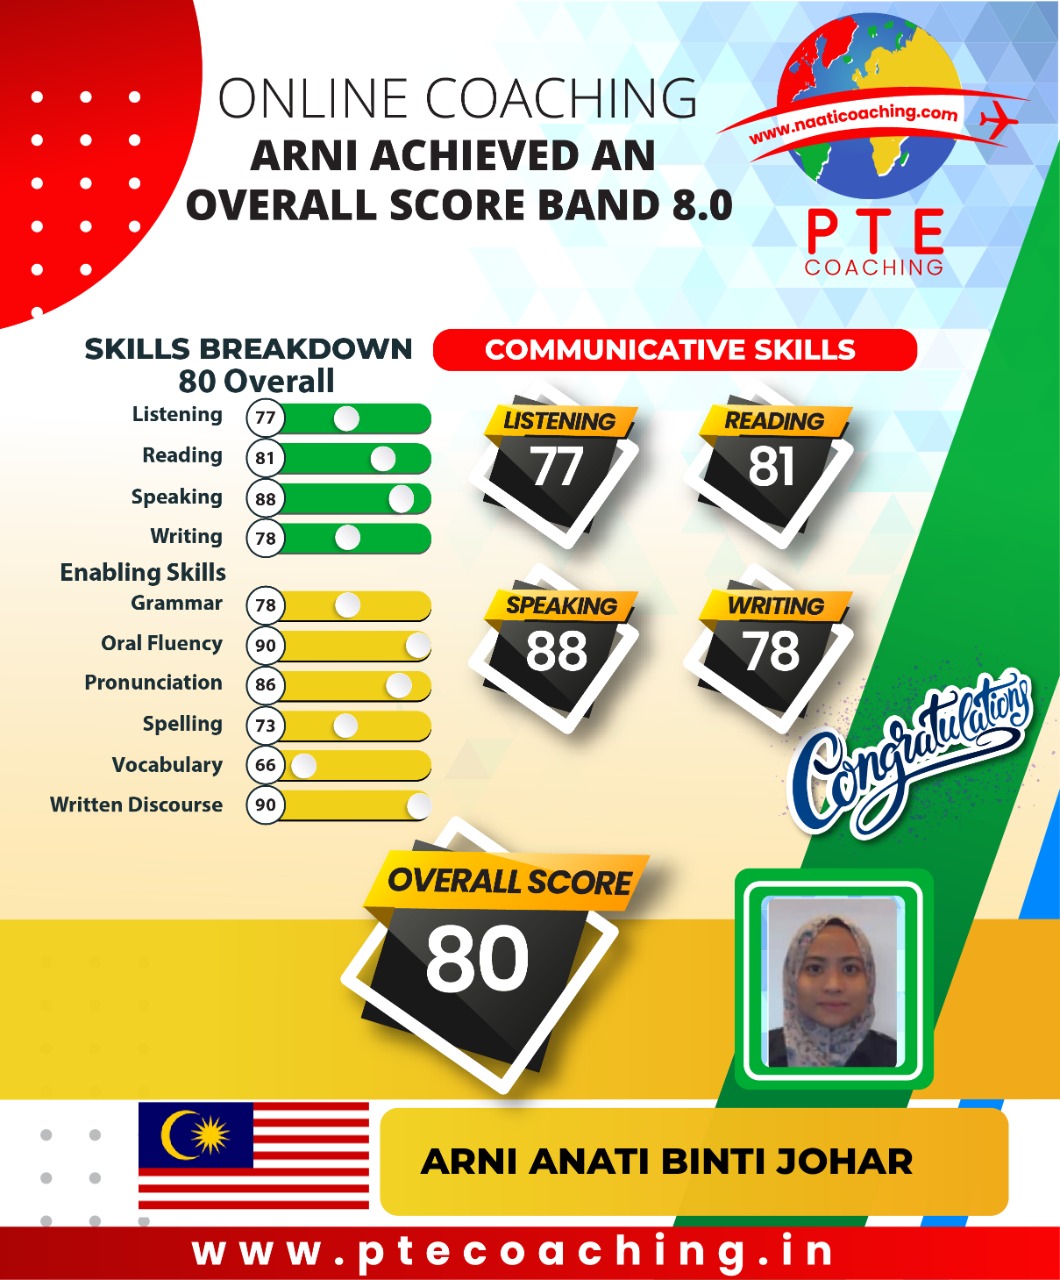 PTE Coaching Scorecard - Arni achieved an overall score band 8.0